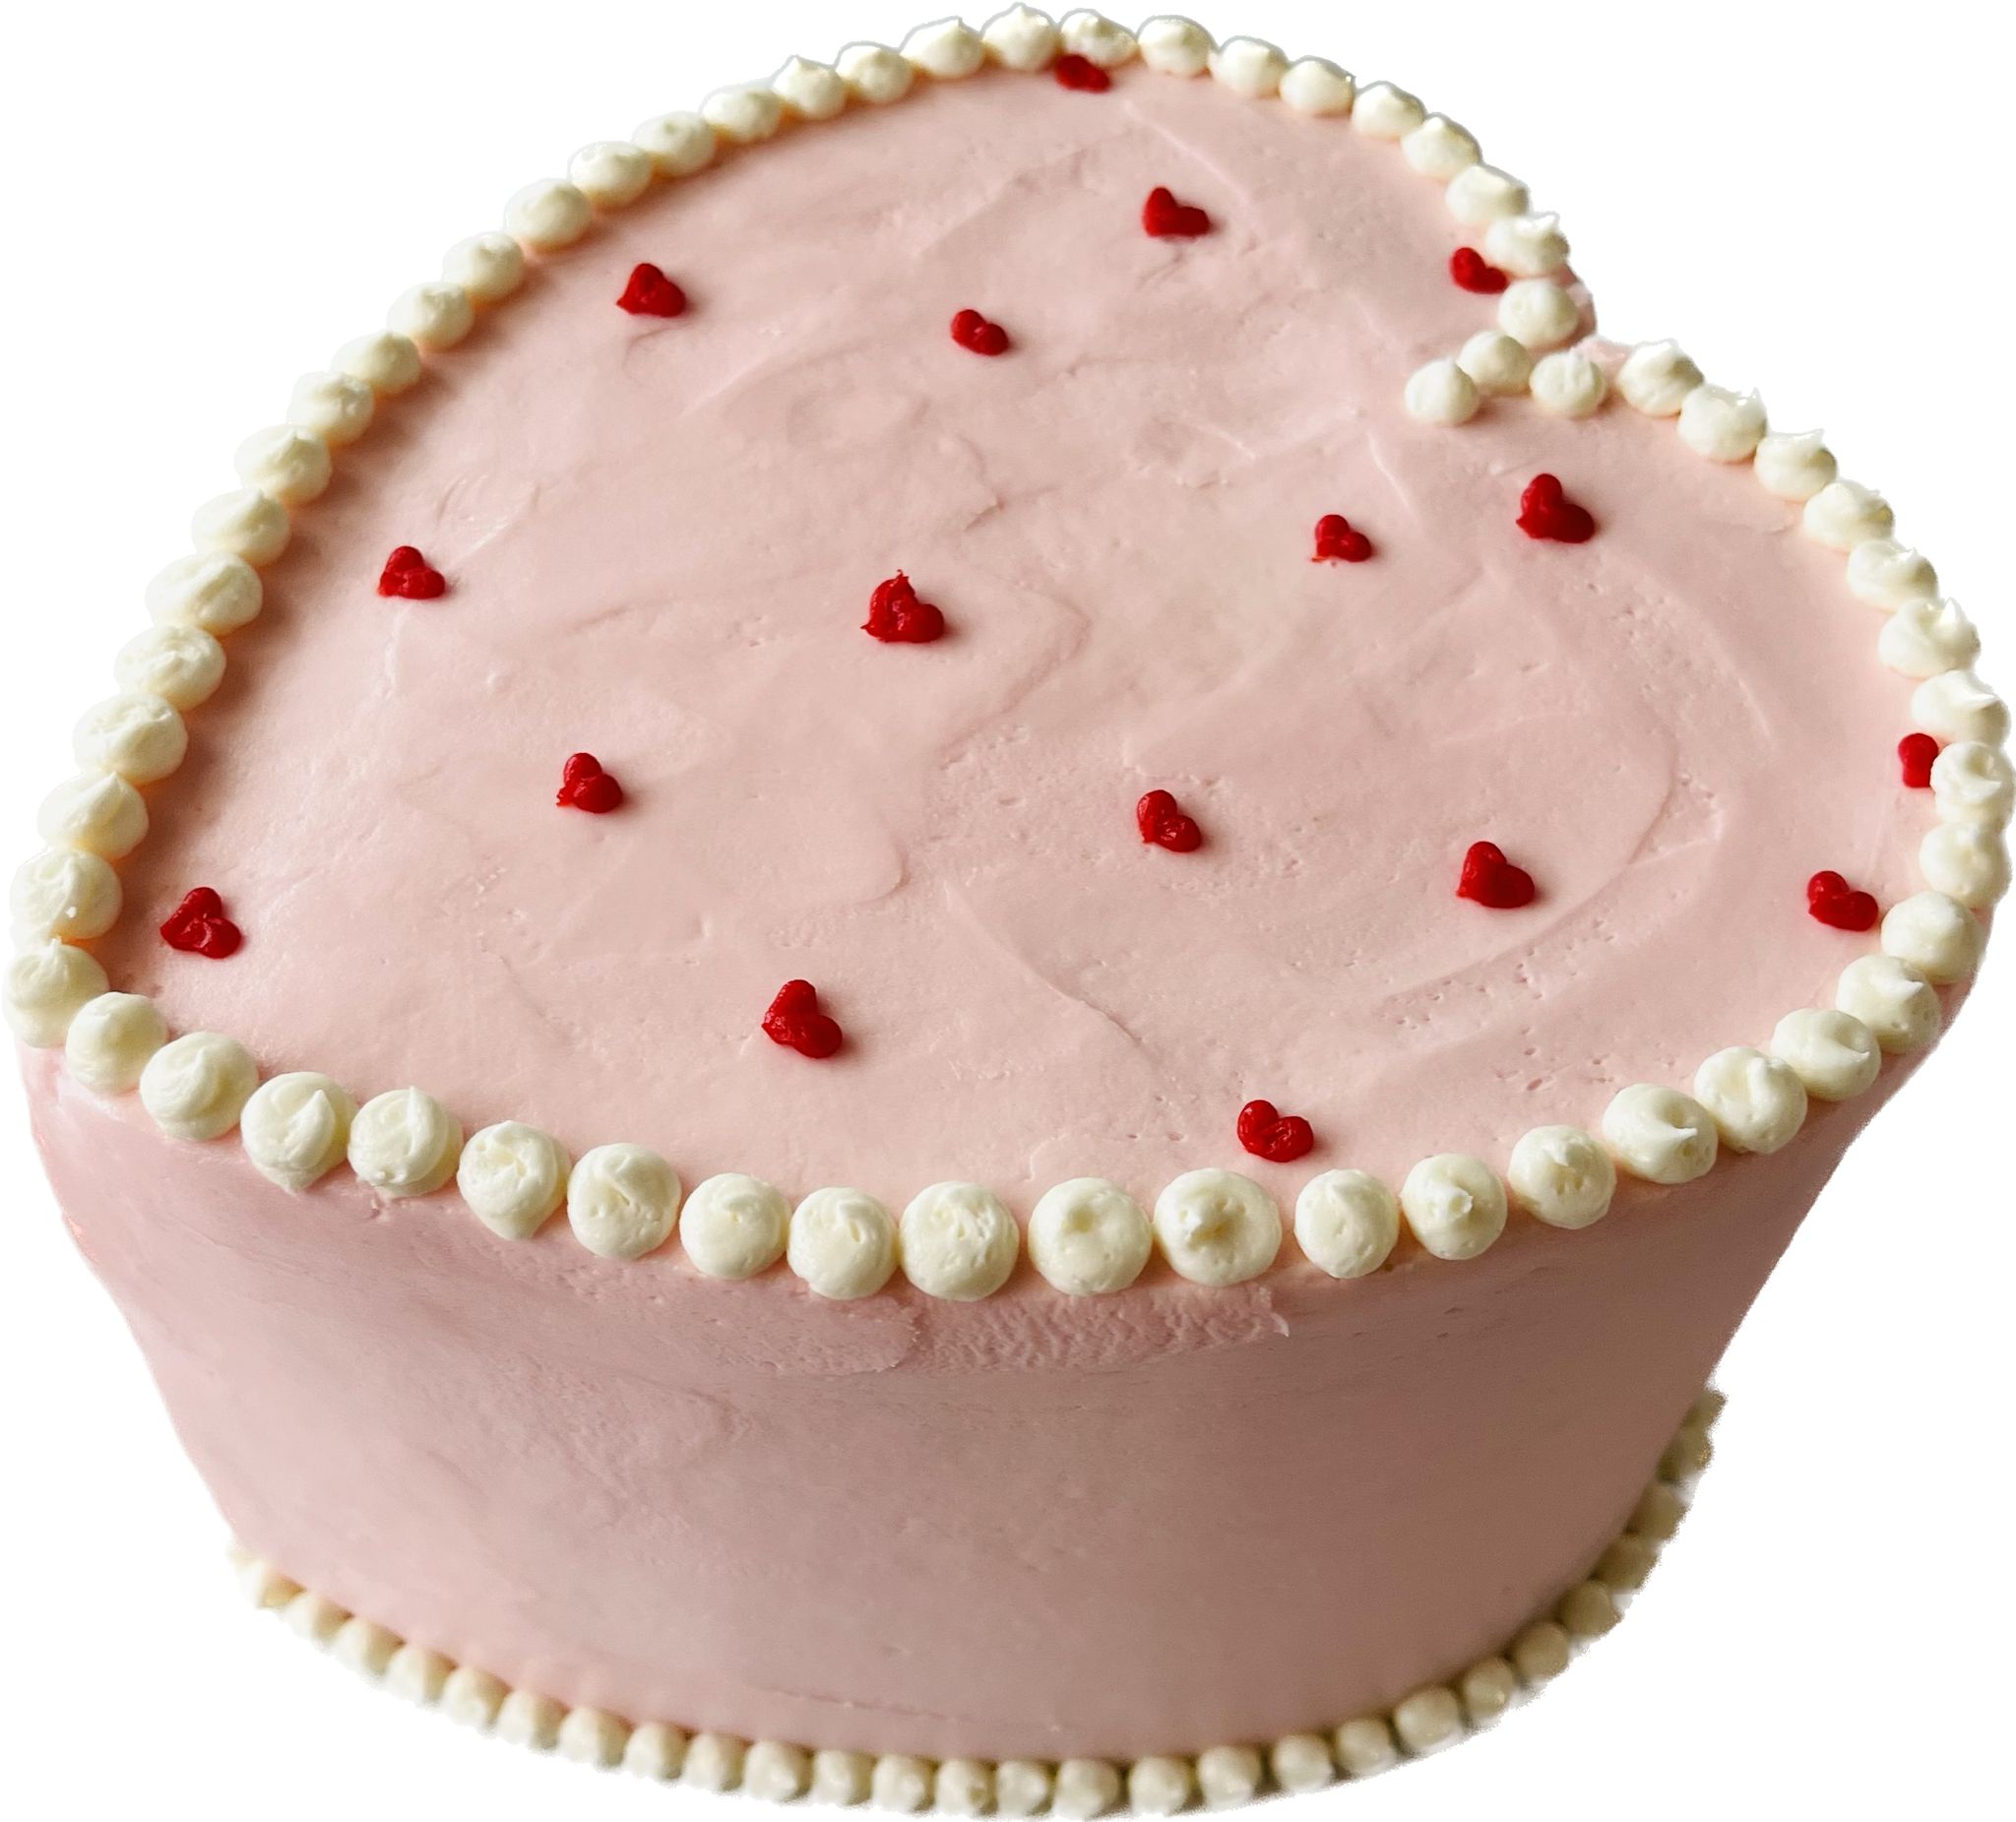 Rosy Blackforest Heart Shape Cake | Winni.in-cacanhphuclong.com.vn